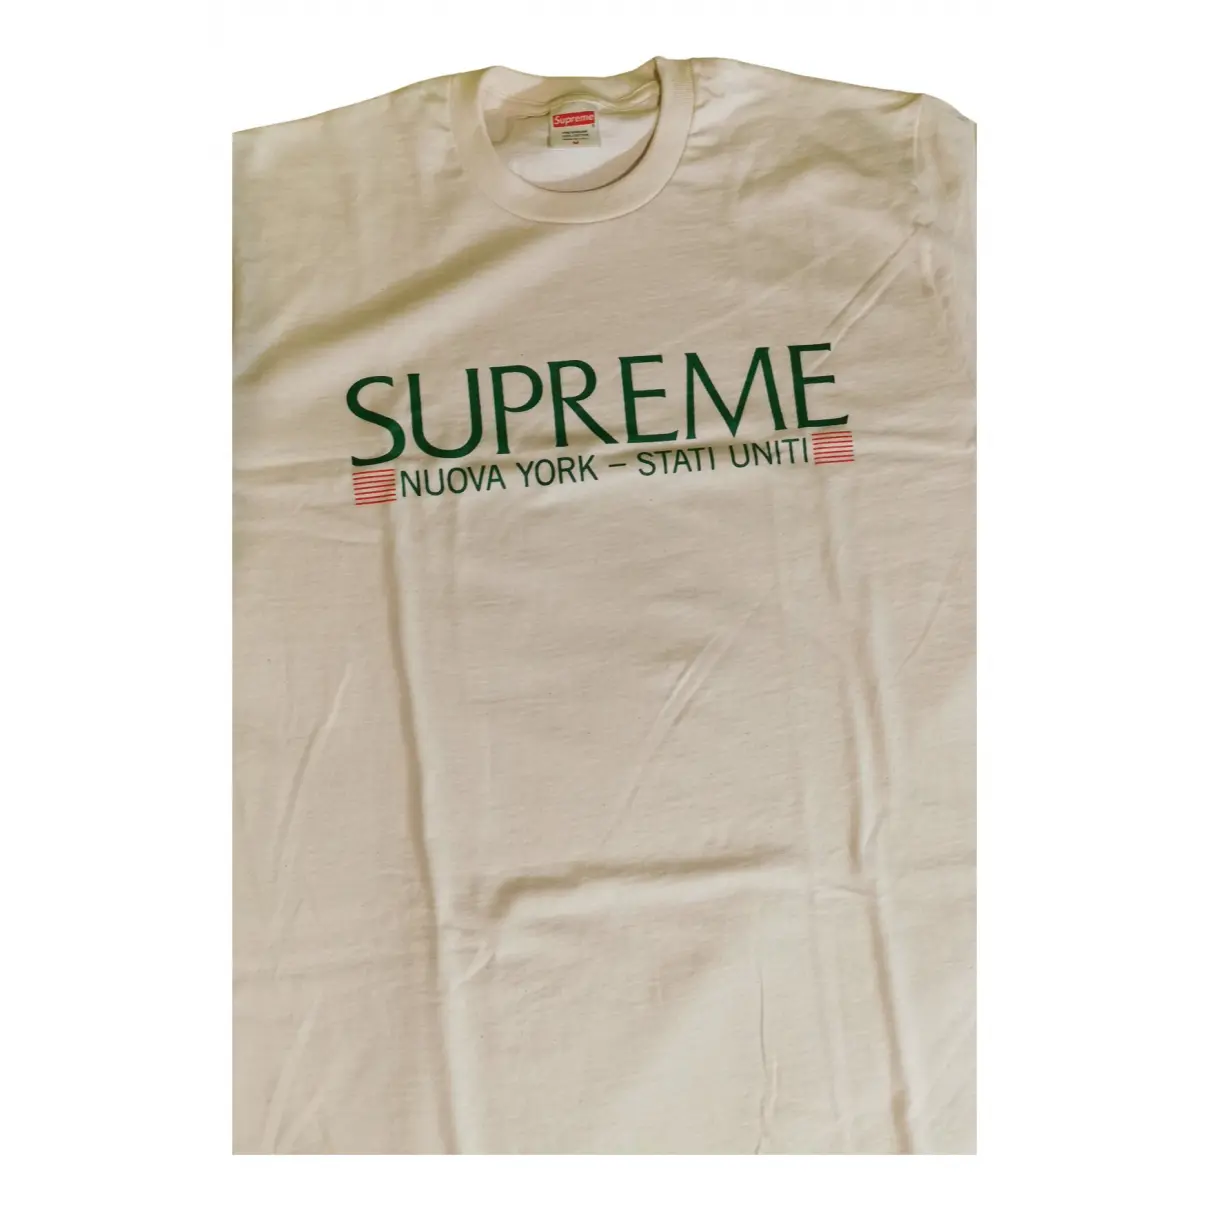 Buy Supreme Beige Cotton T-shirt online